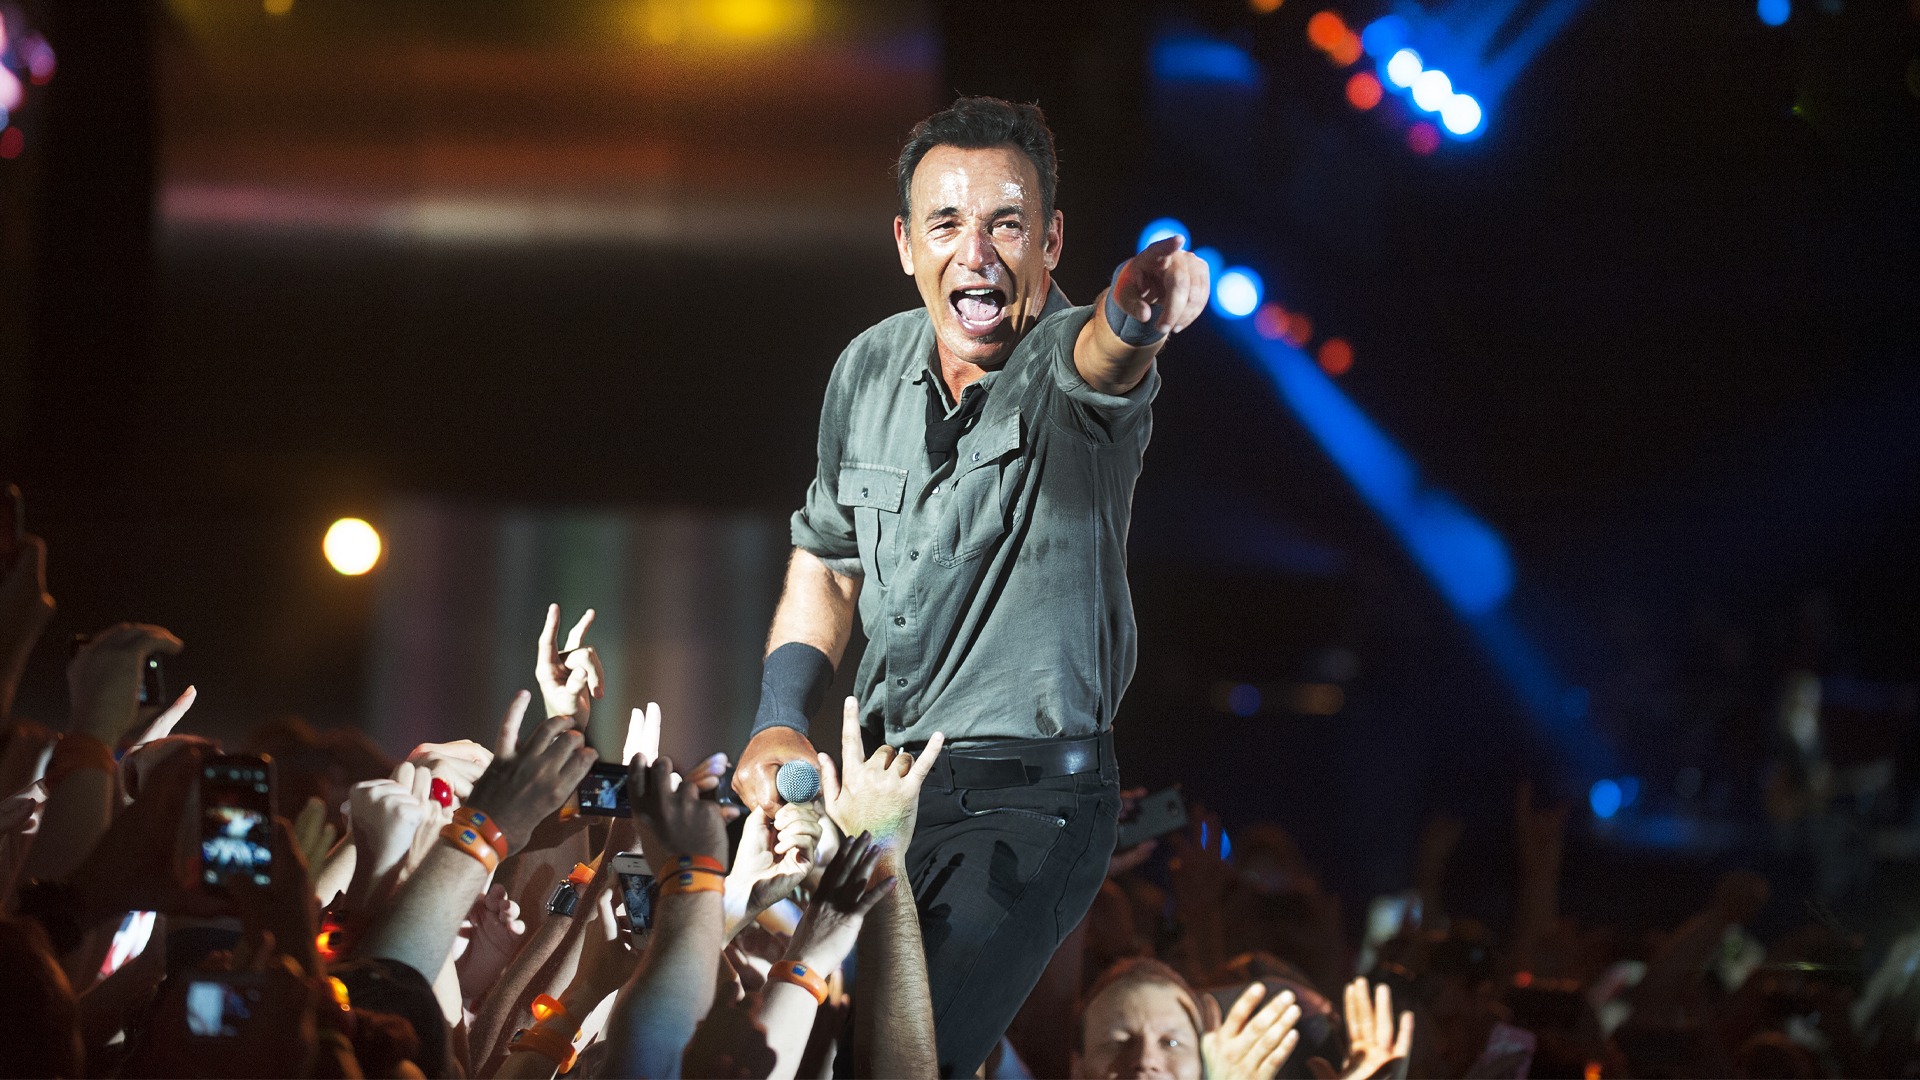 II. The power of storytelling in Bruce Springsteen's songs